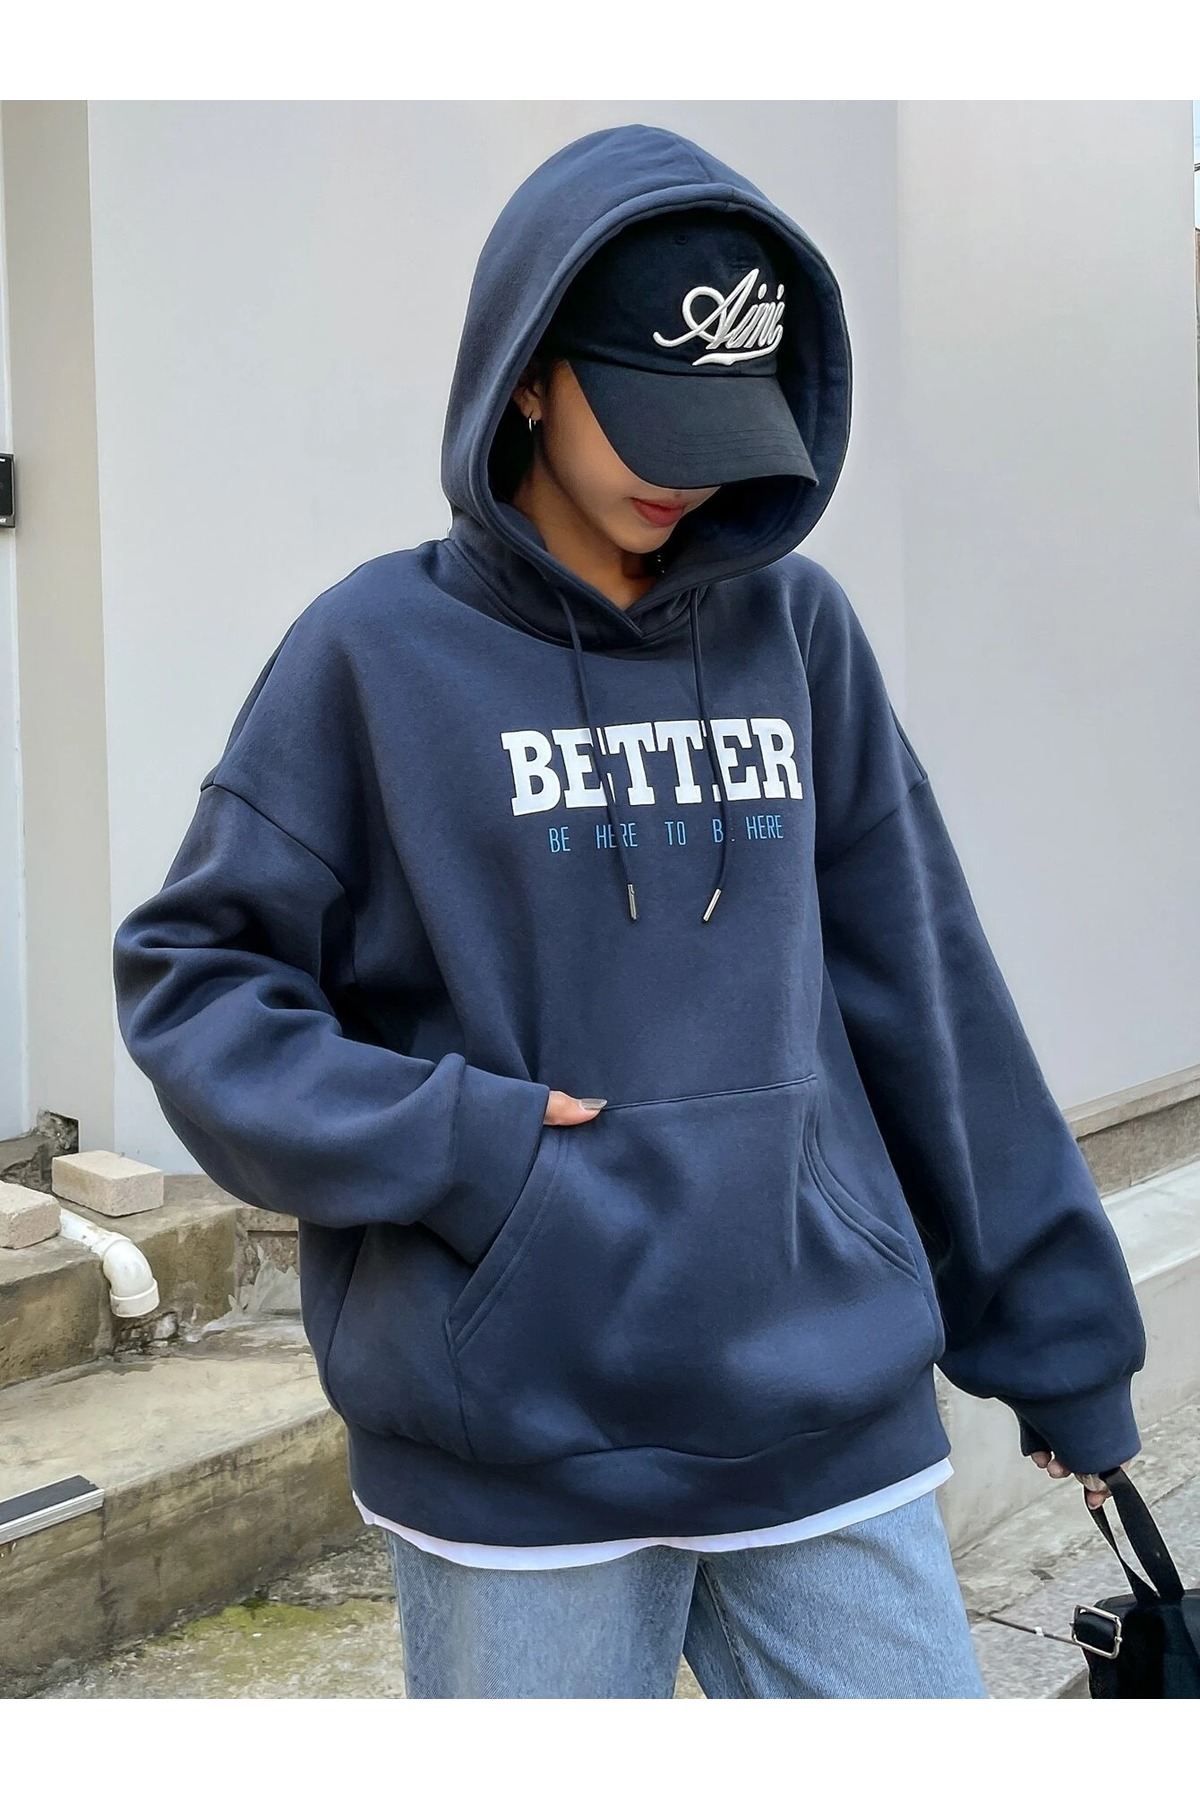 Know Women's Navy Blue Better Printed Oversize Sweatshirt